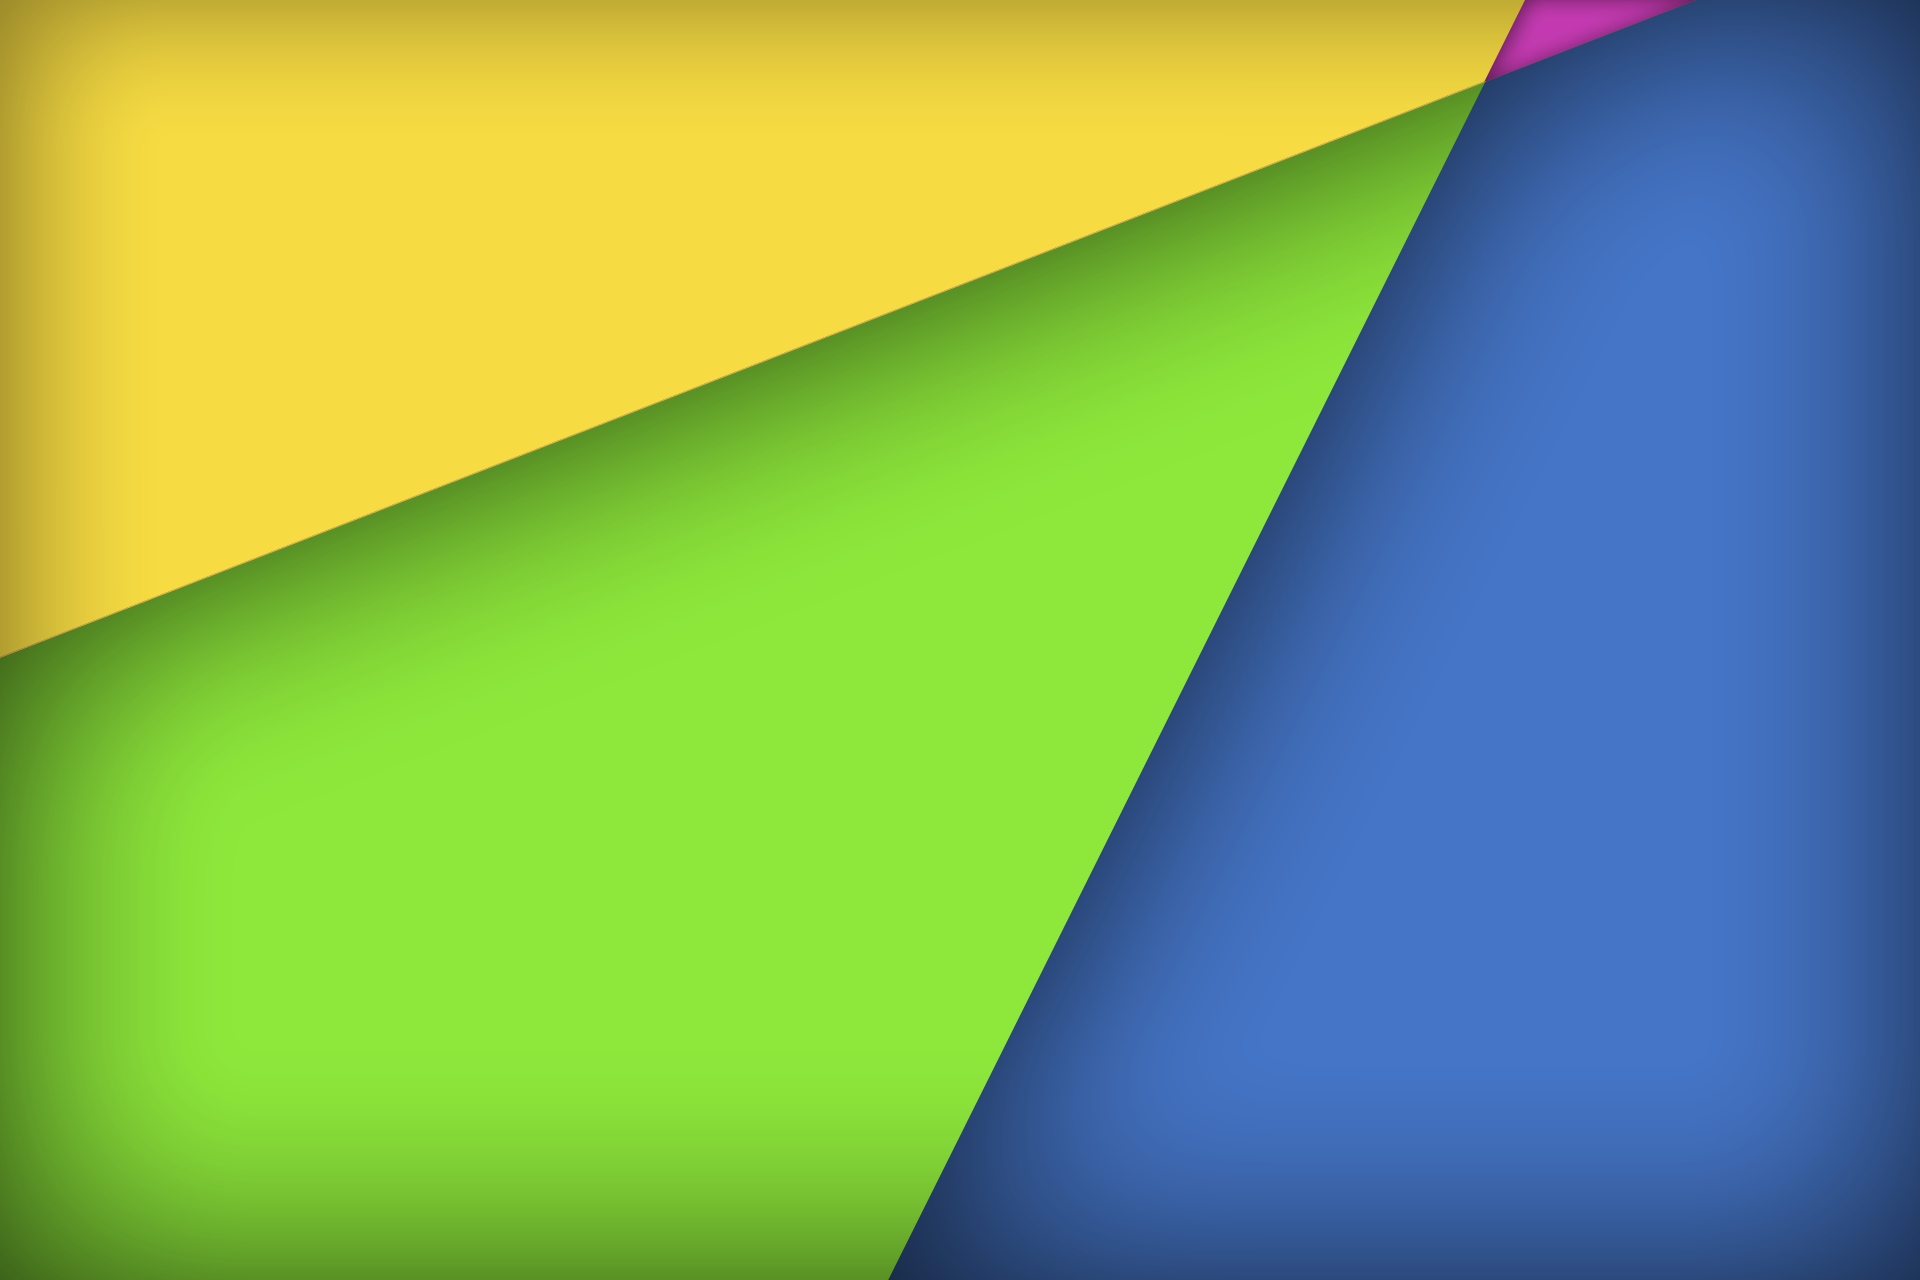 google nexus wallpaper hd,green,blue,yellow,colorfulness,line